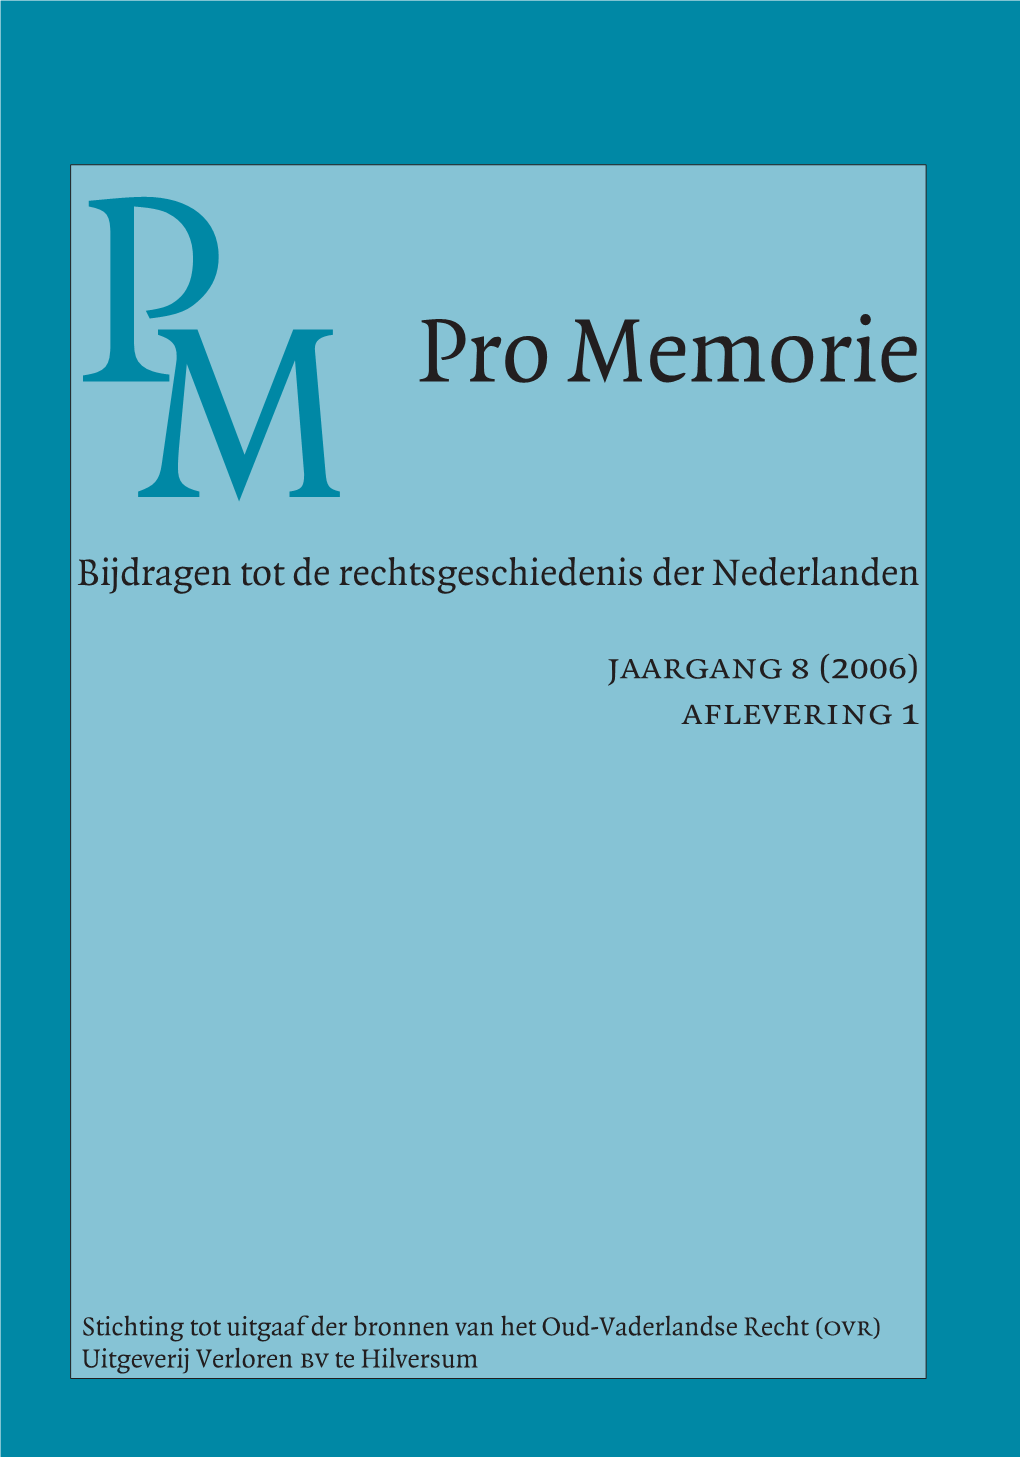 Pro Memorie 08(2006)